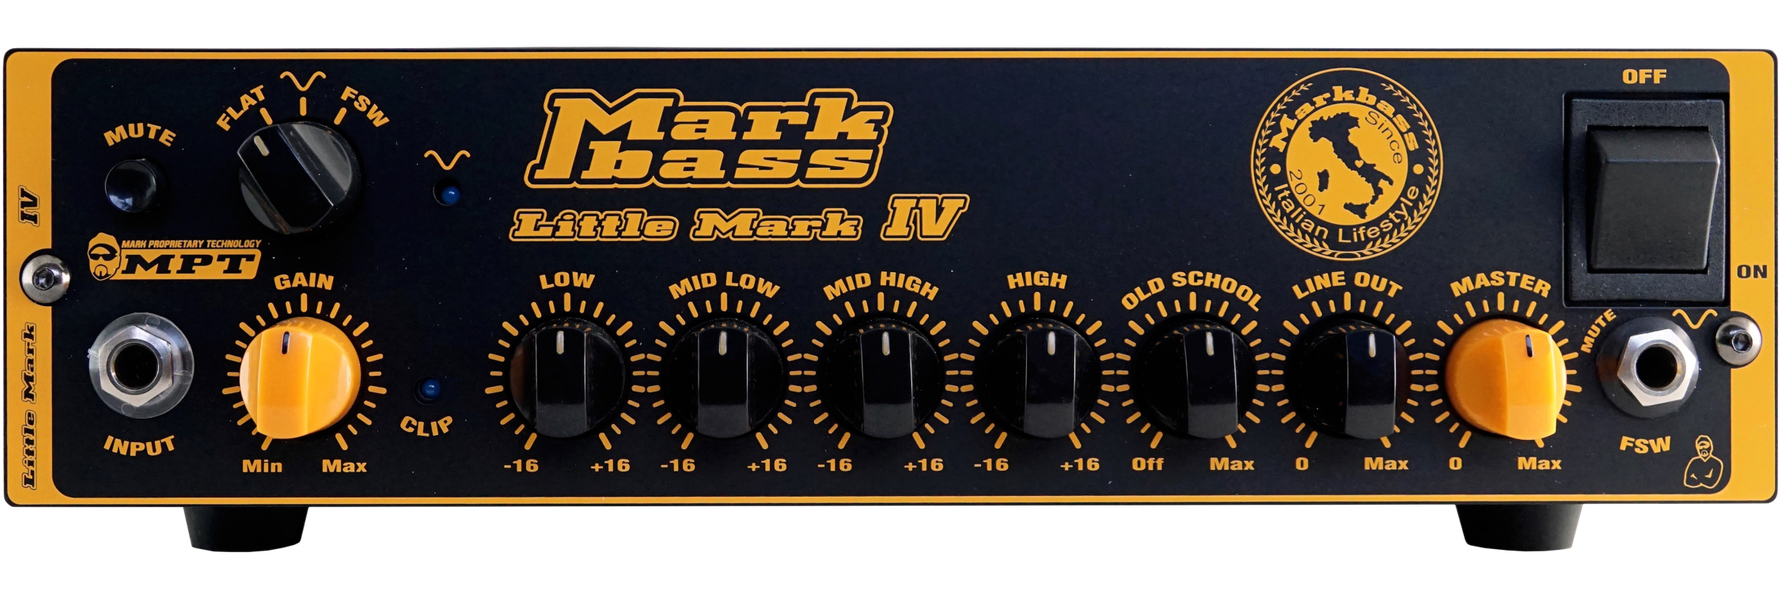 Markbass Little Mark Iv 500w Black - Cabezal para bajo - Variation 1